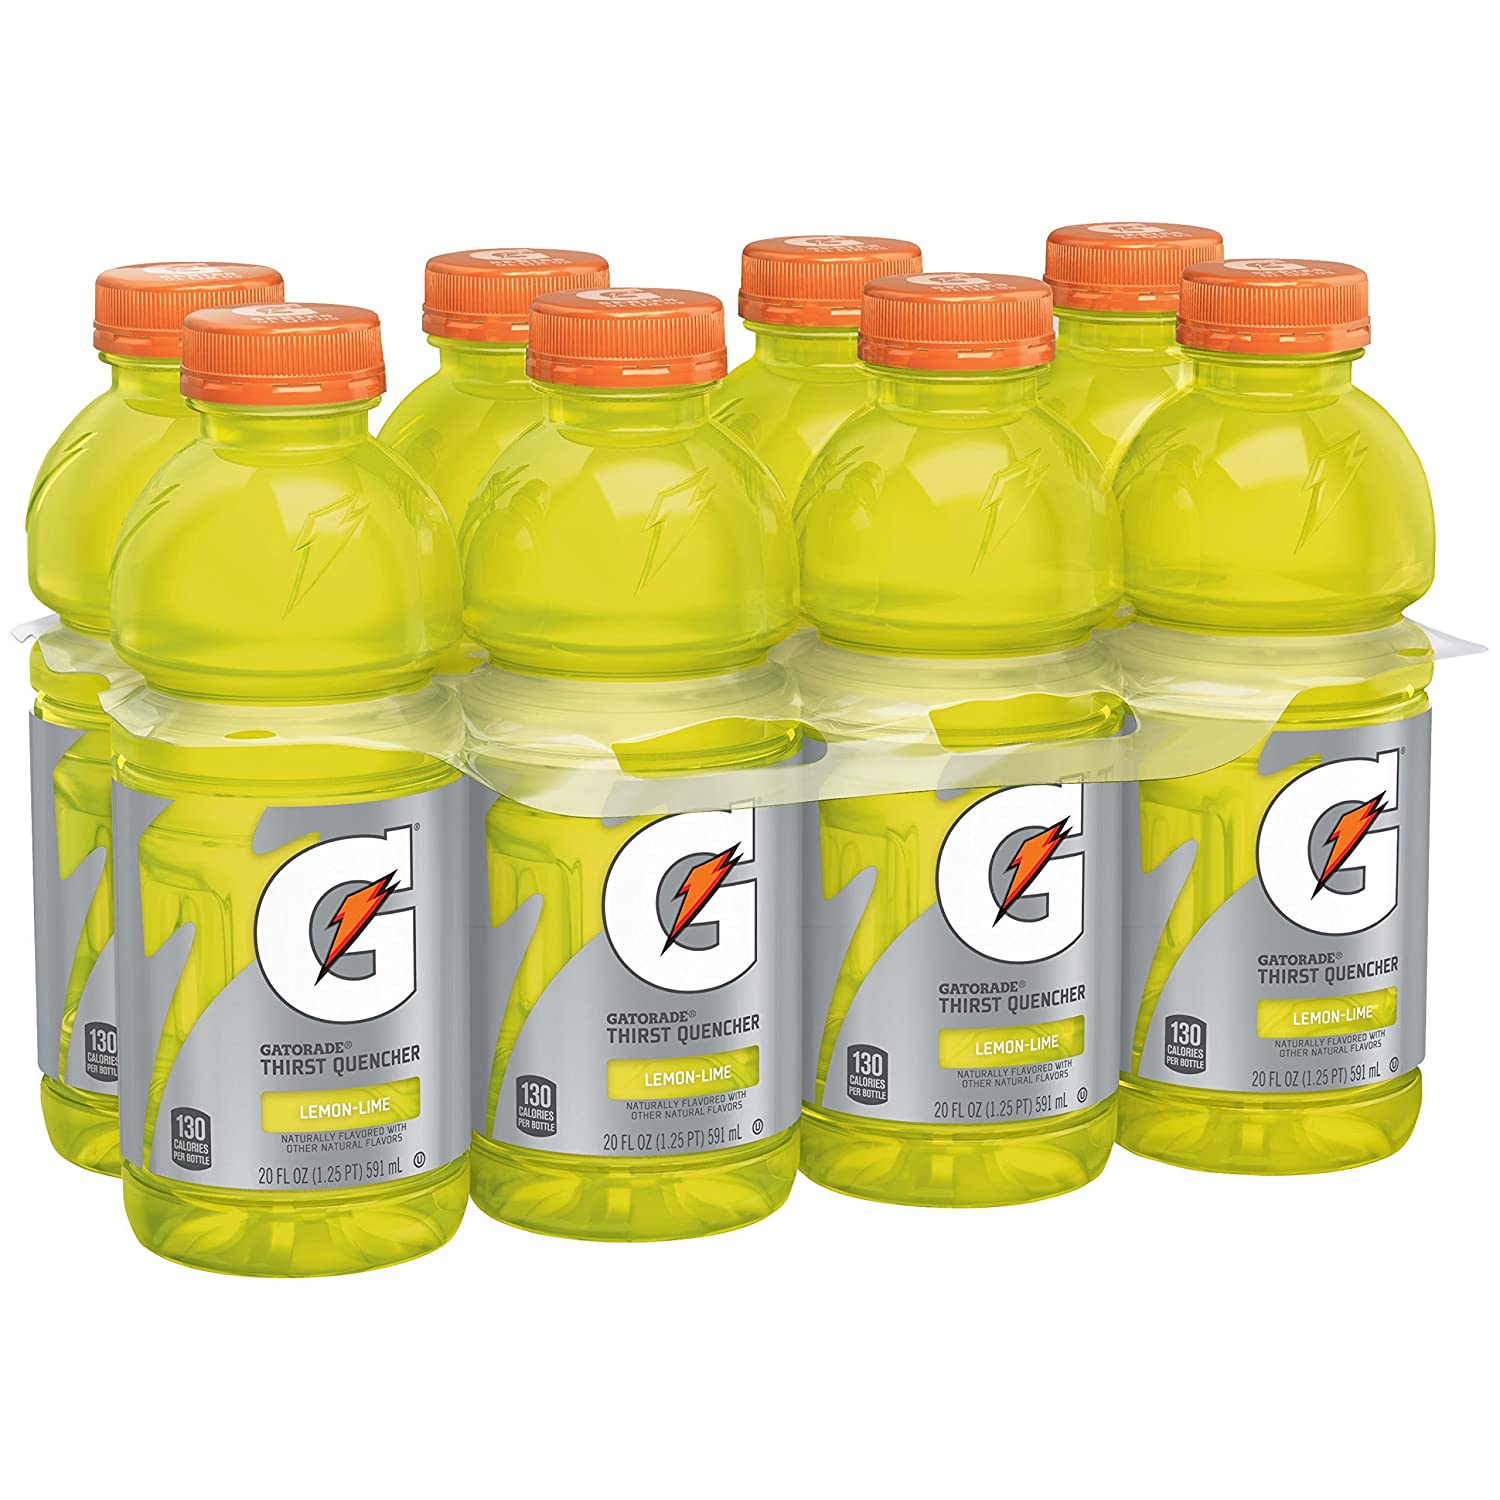 Gatorade Thirst Quencher, Lemon Lime Sports Drinks, 20 fl oz, 8 Count Bottles - image 1 of 7